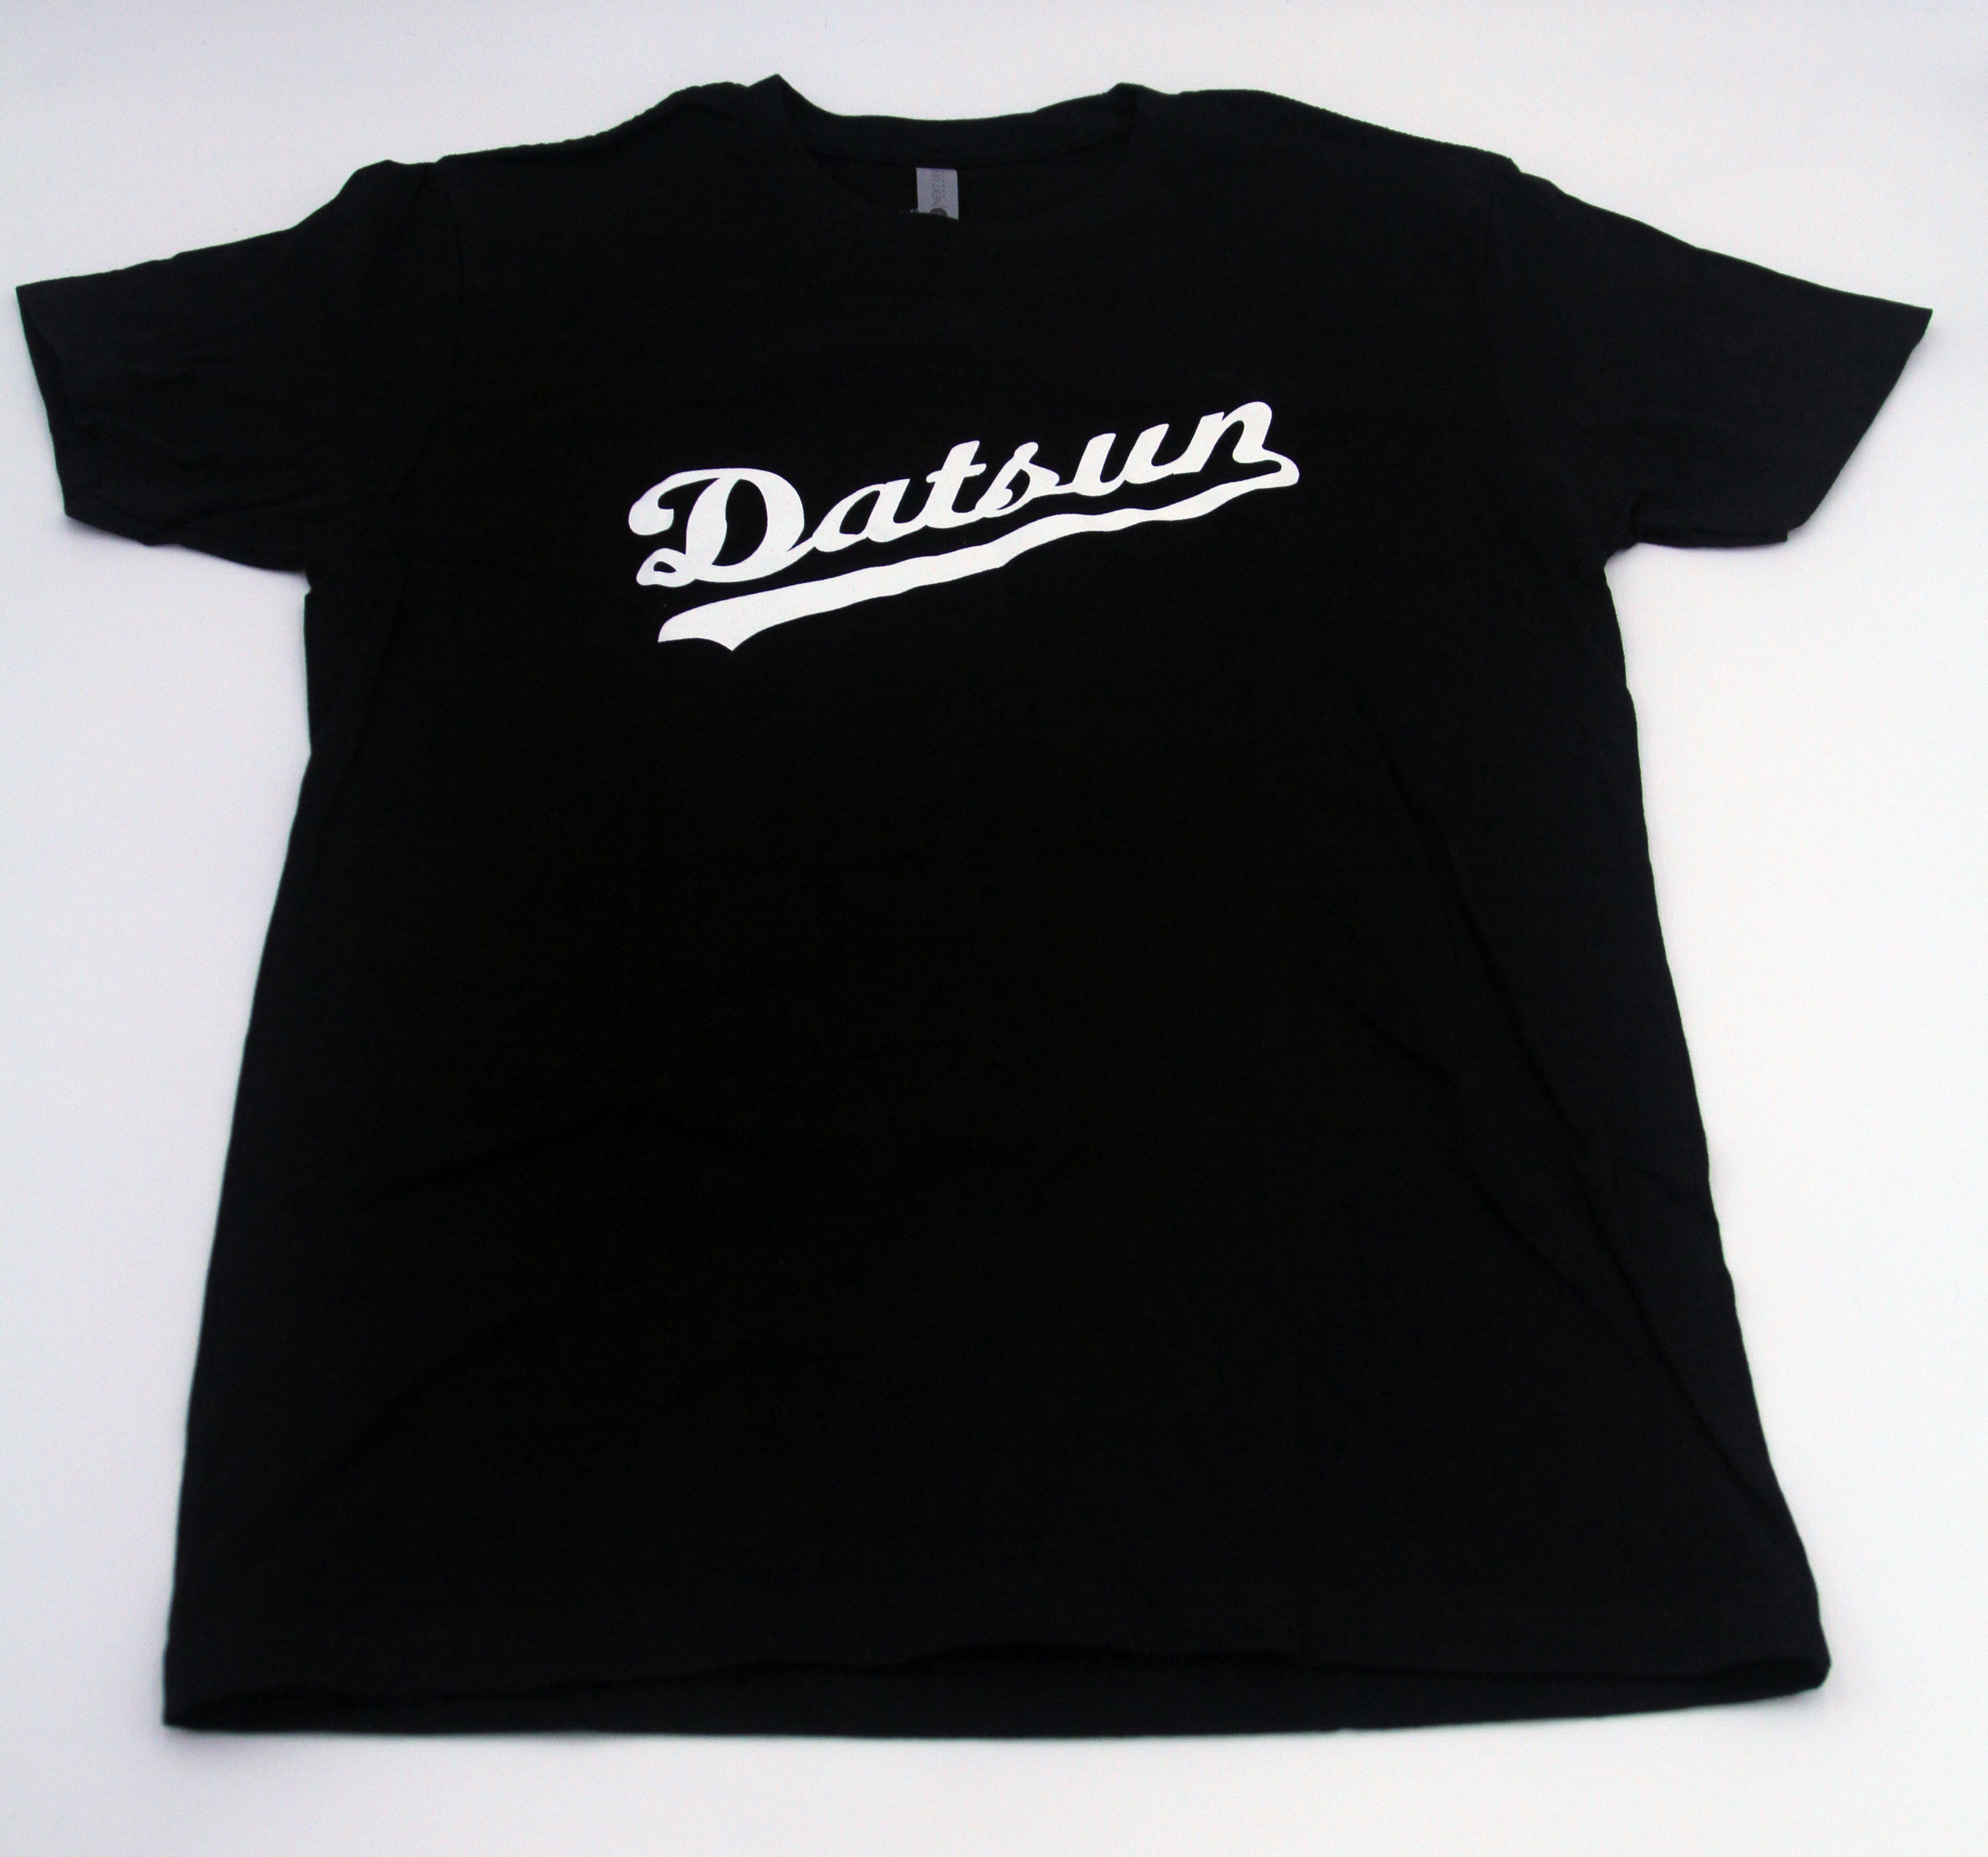 DG "Datsun" Black T-Shirt